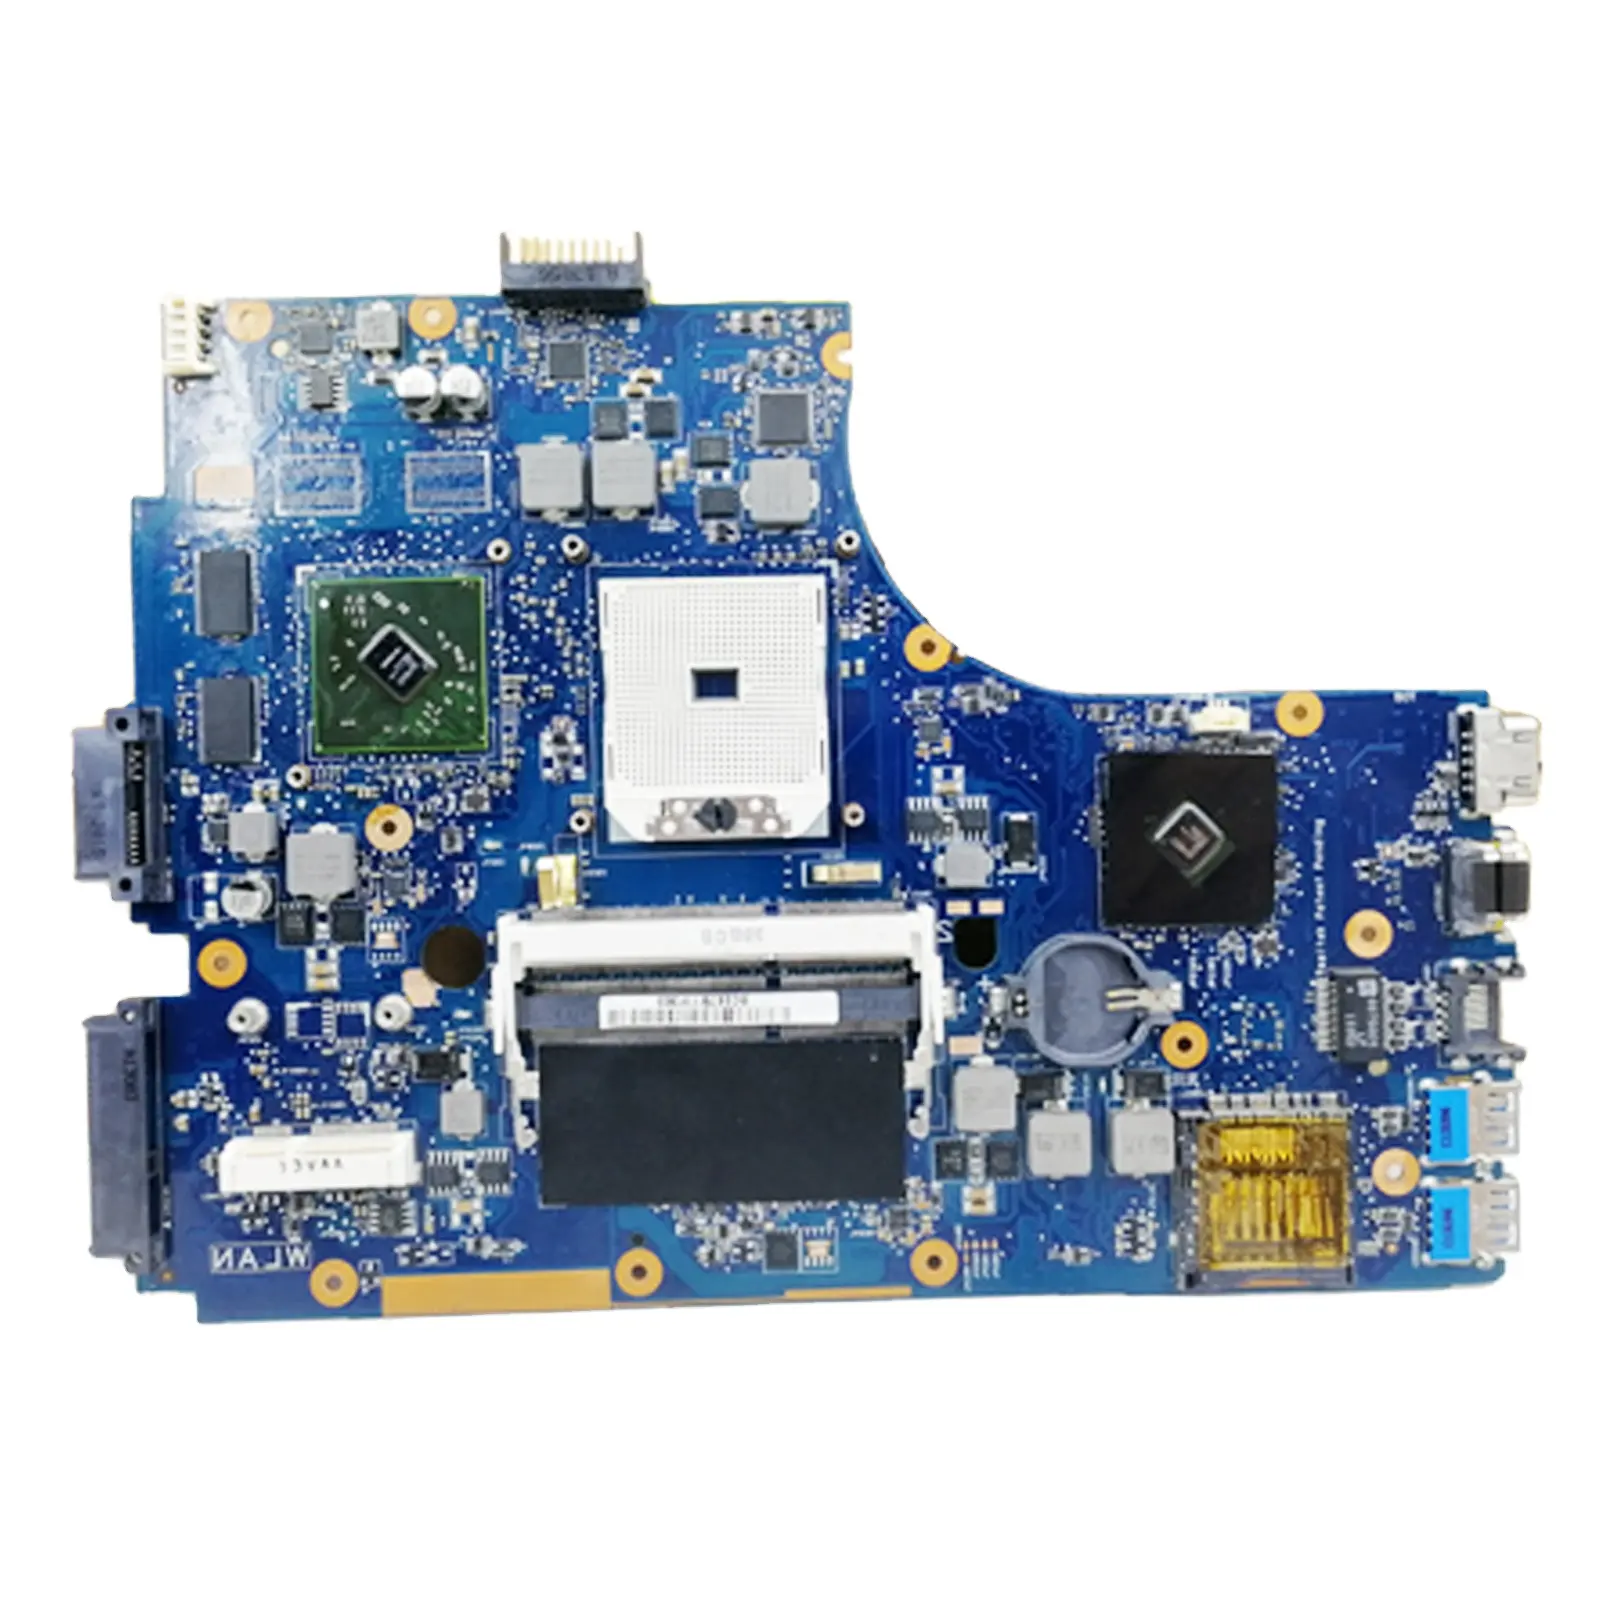 K55DR Notebook Mainboard For Asus A55DR K55D K55DE K55N Laptop Motherboard AMD Graphics Card 100% Working Well DDR3